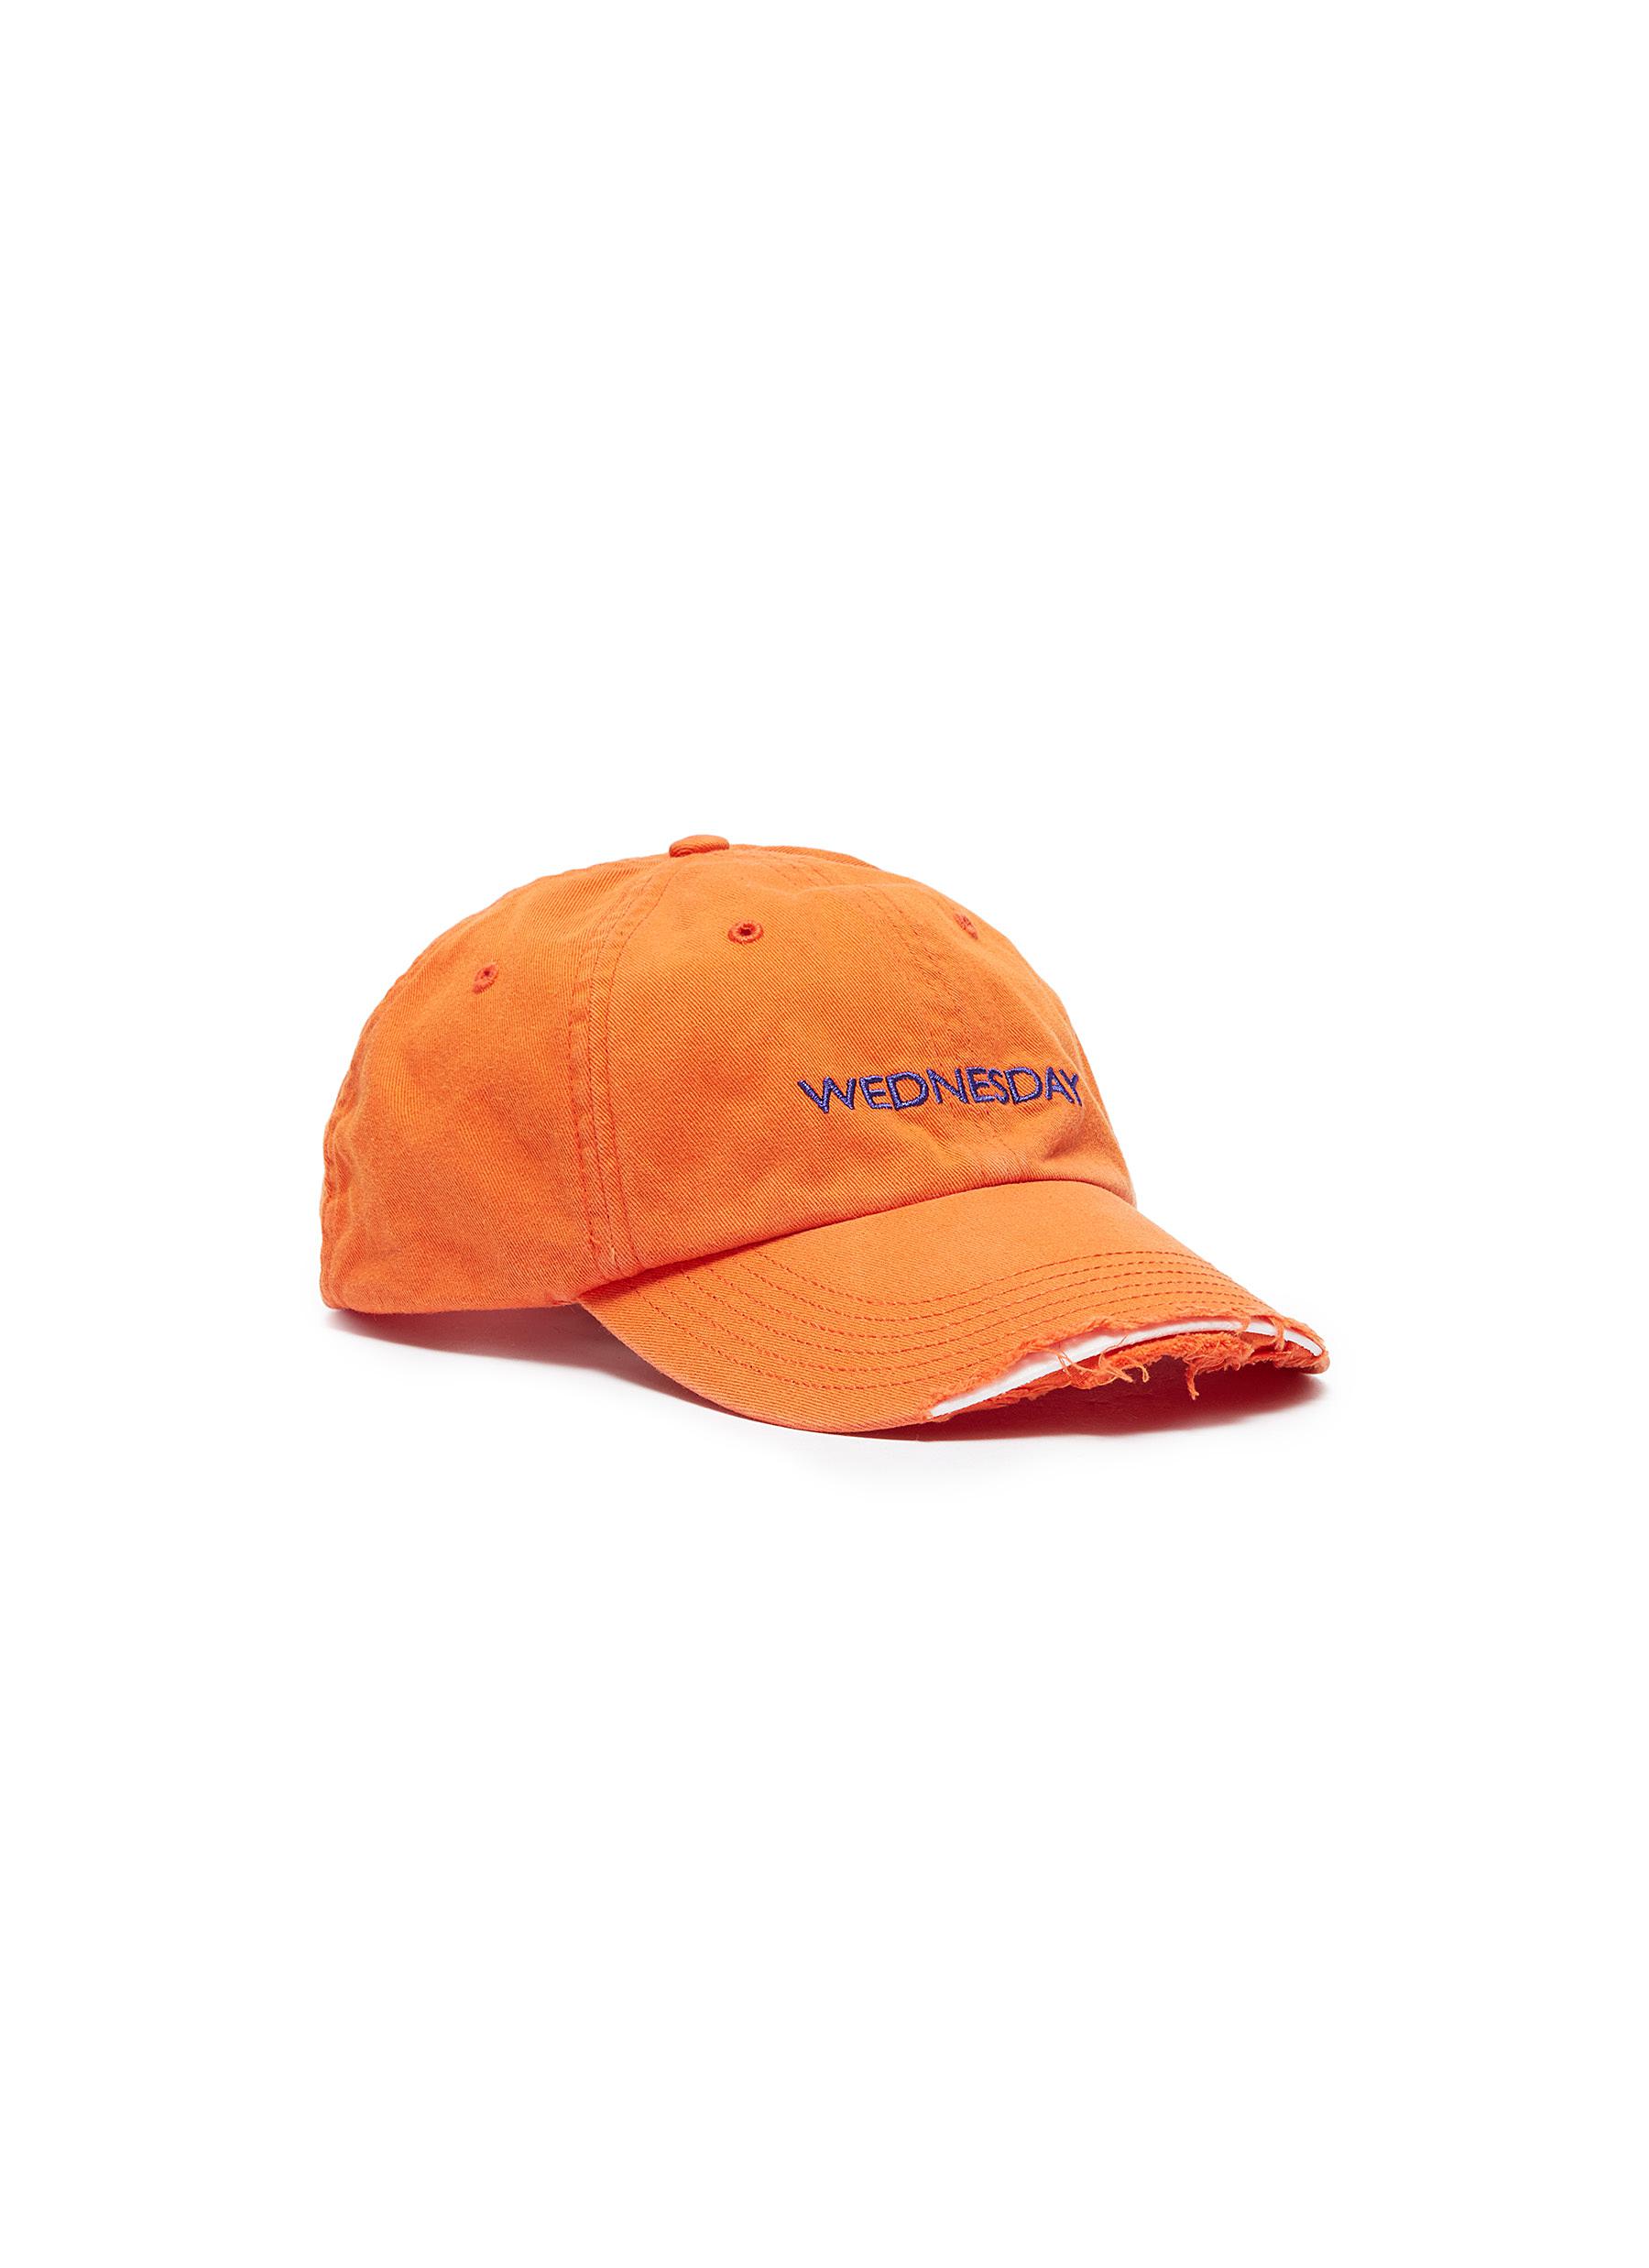 WEDNESDAY x Reebok 'Weekday' slogan embroidered distressed baseball cap